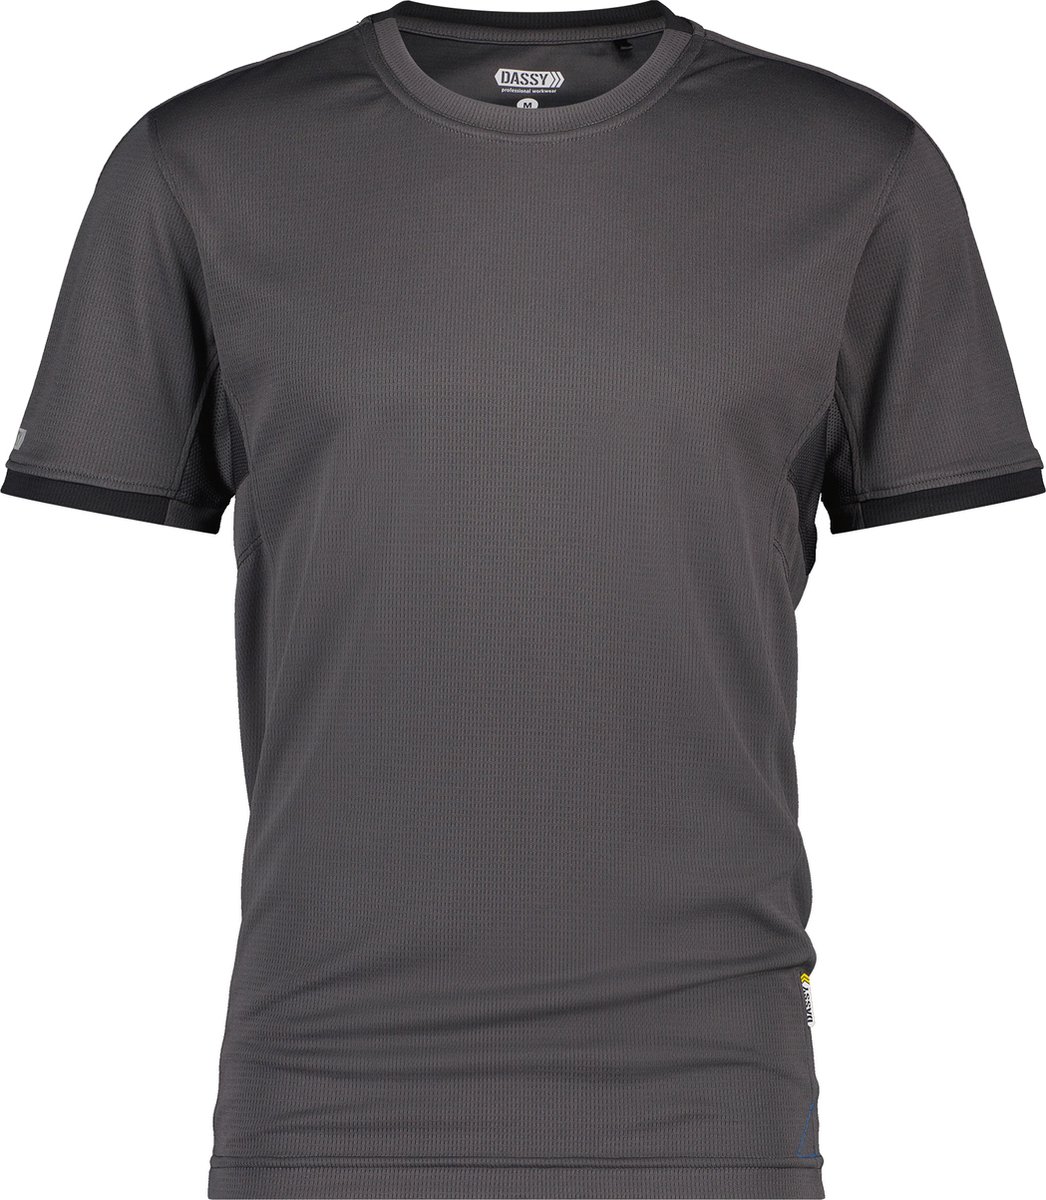 DASSY® Nexus T-shirt - maat M - ANTRACIETGRIJS/ZWART